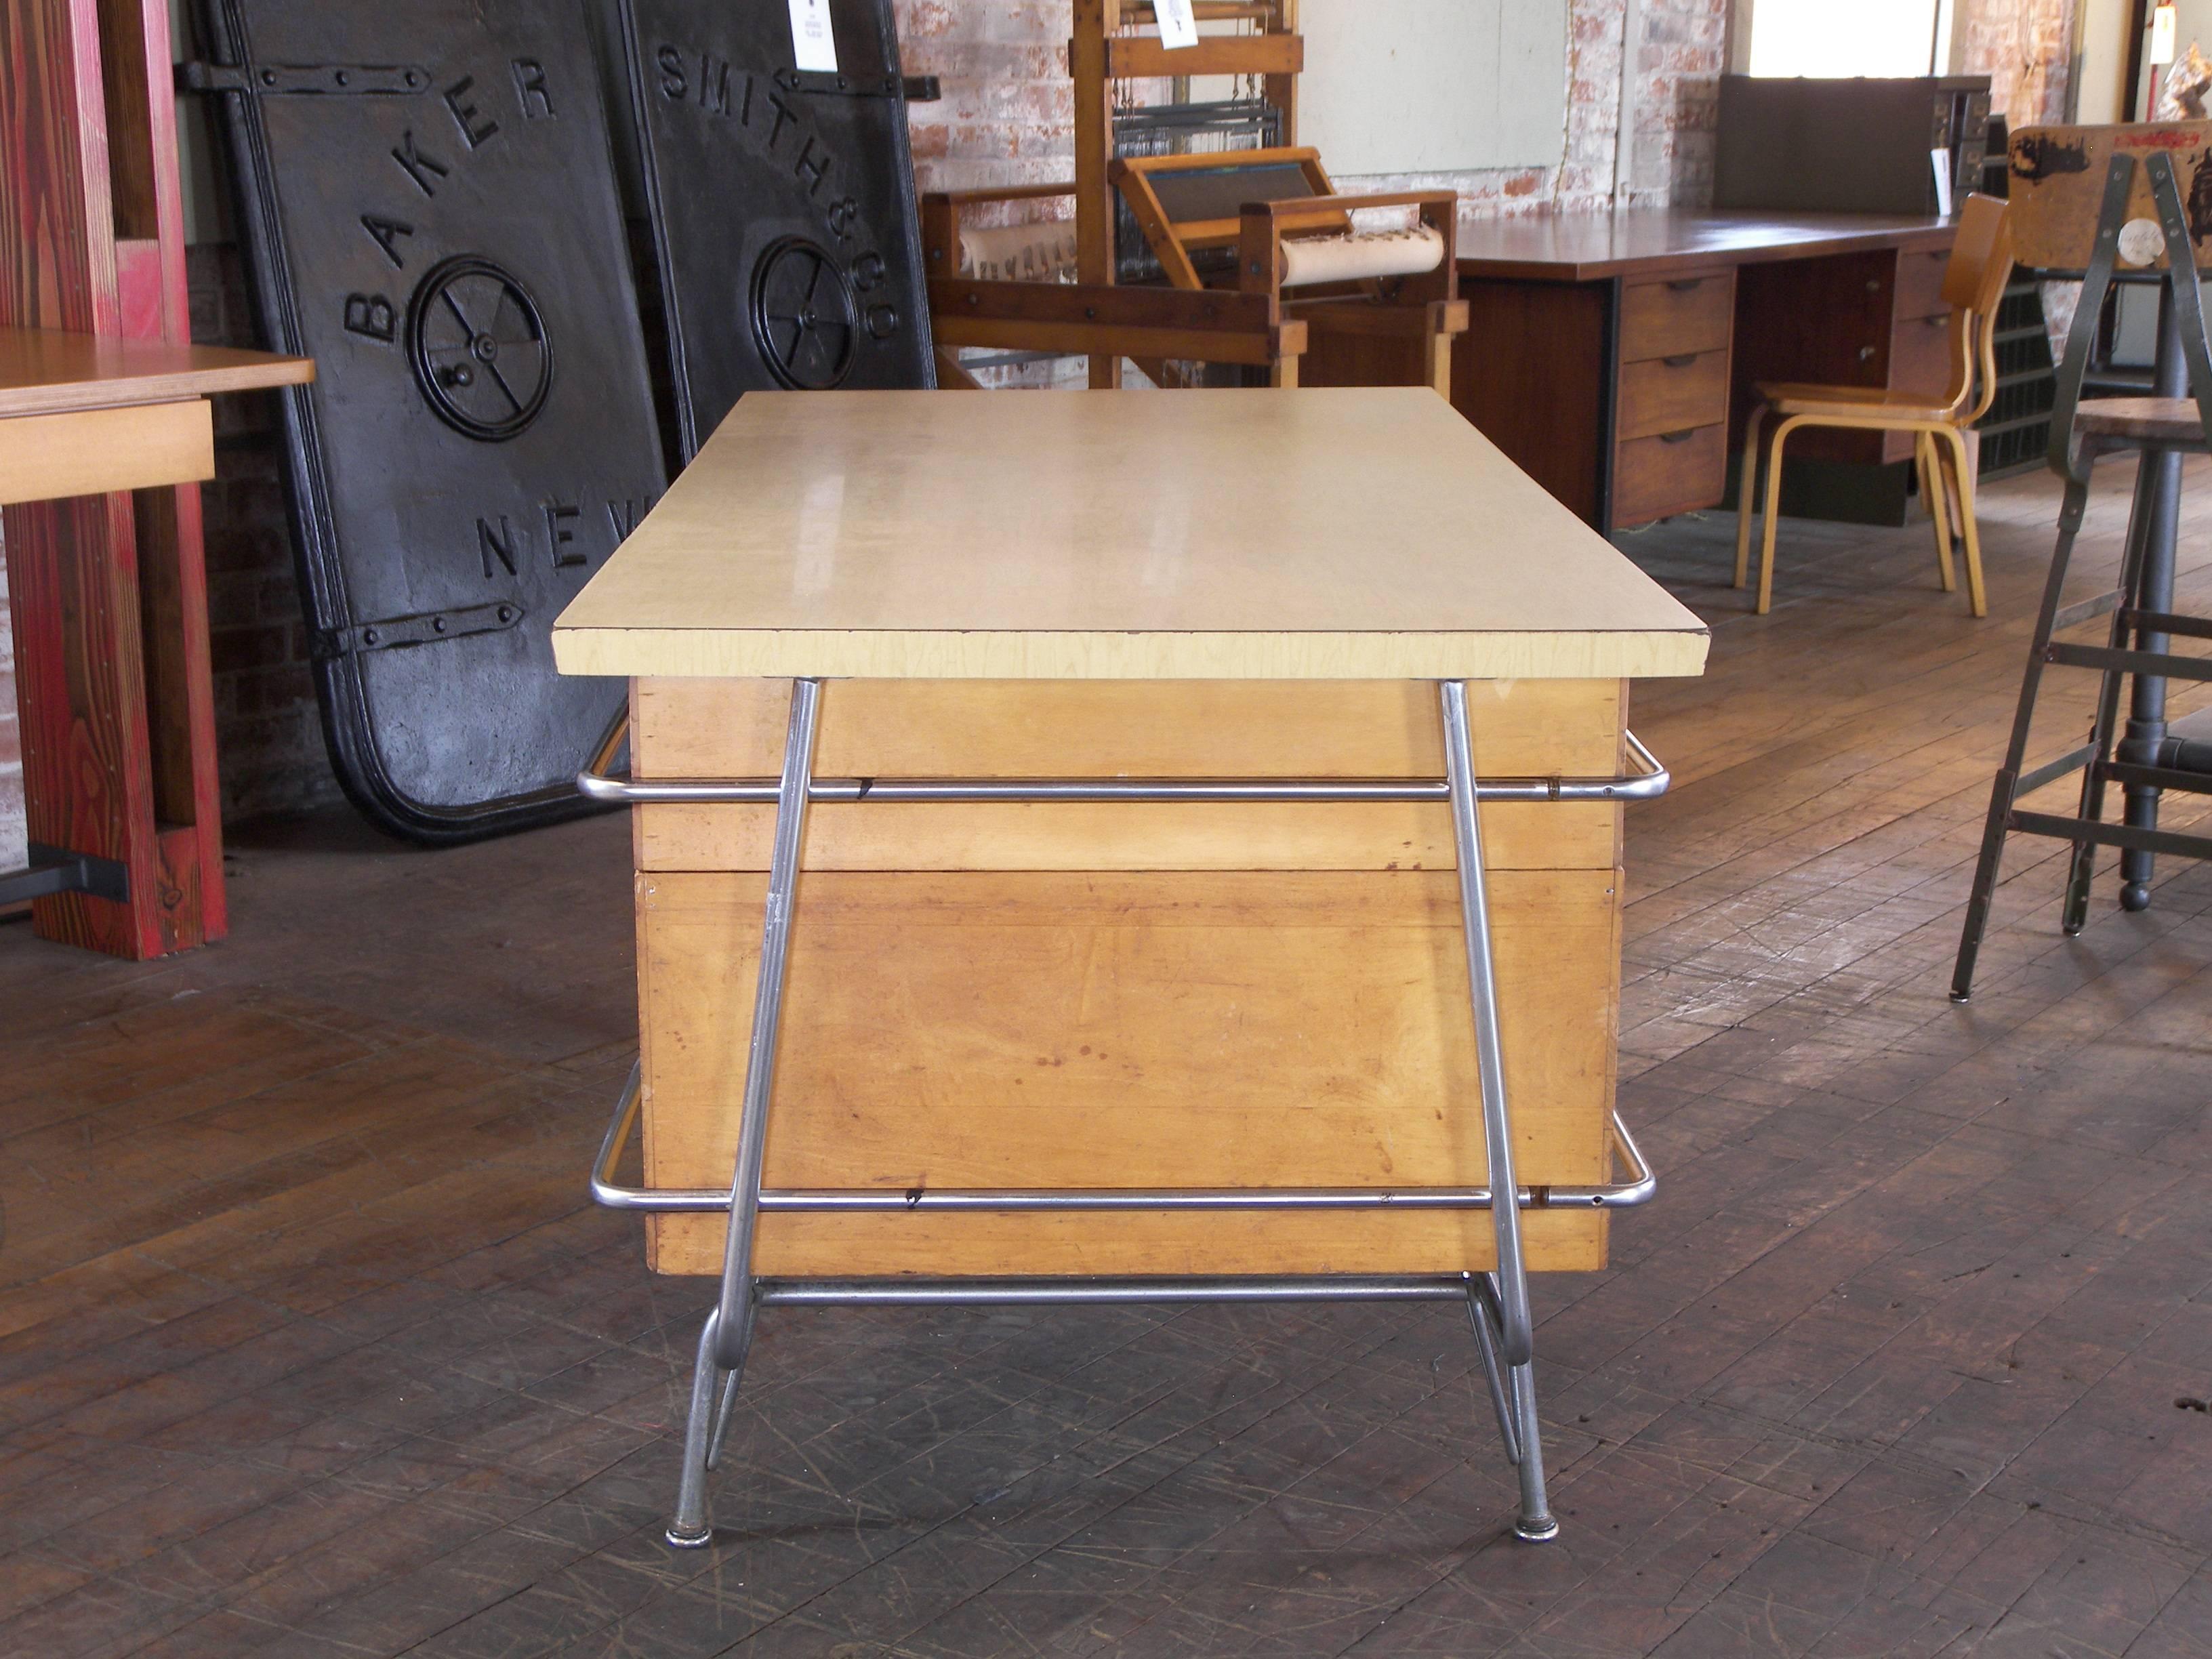 20th Century Heywood-Wakefield Desk, 1950s Mid-Century Modern Trimline Chrome and Wood